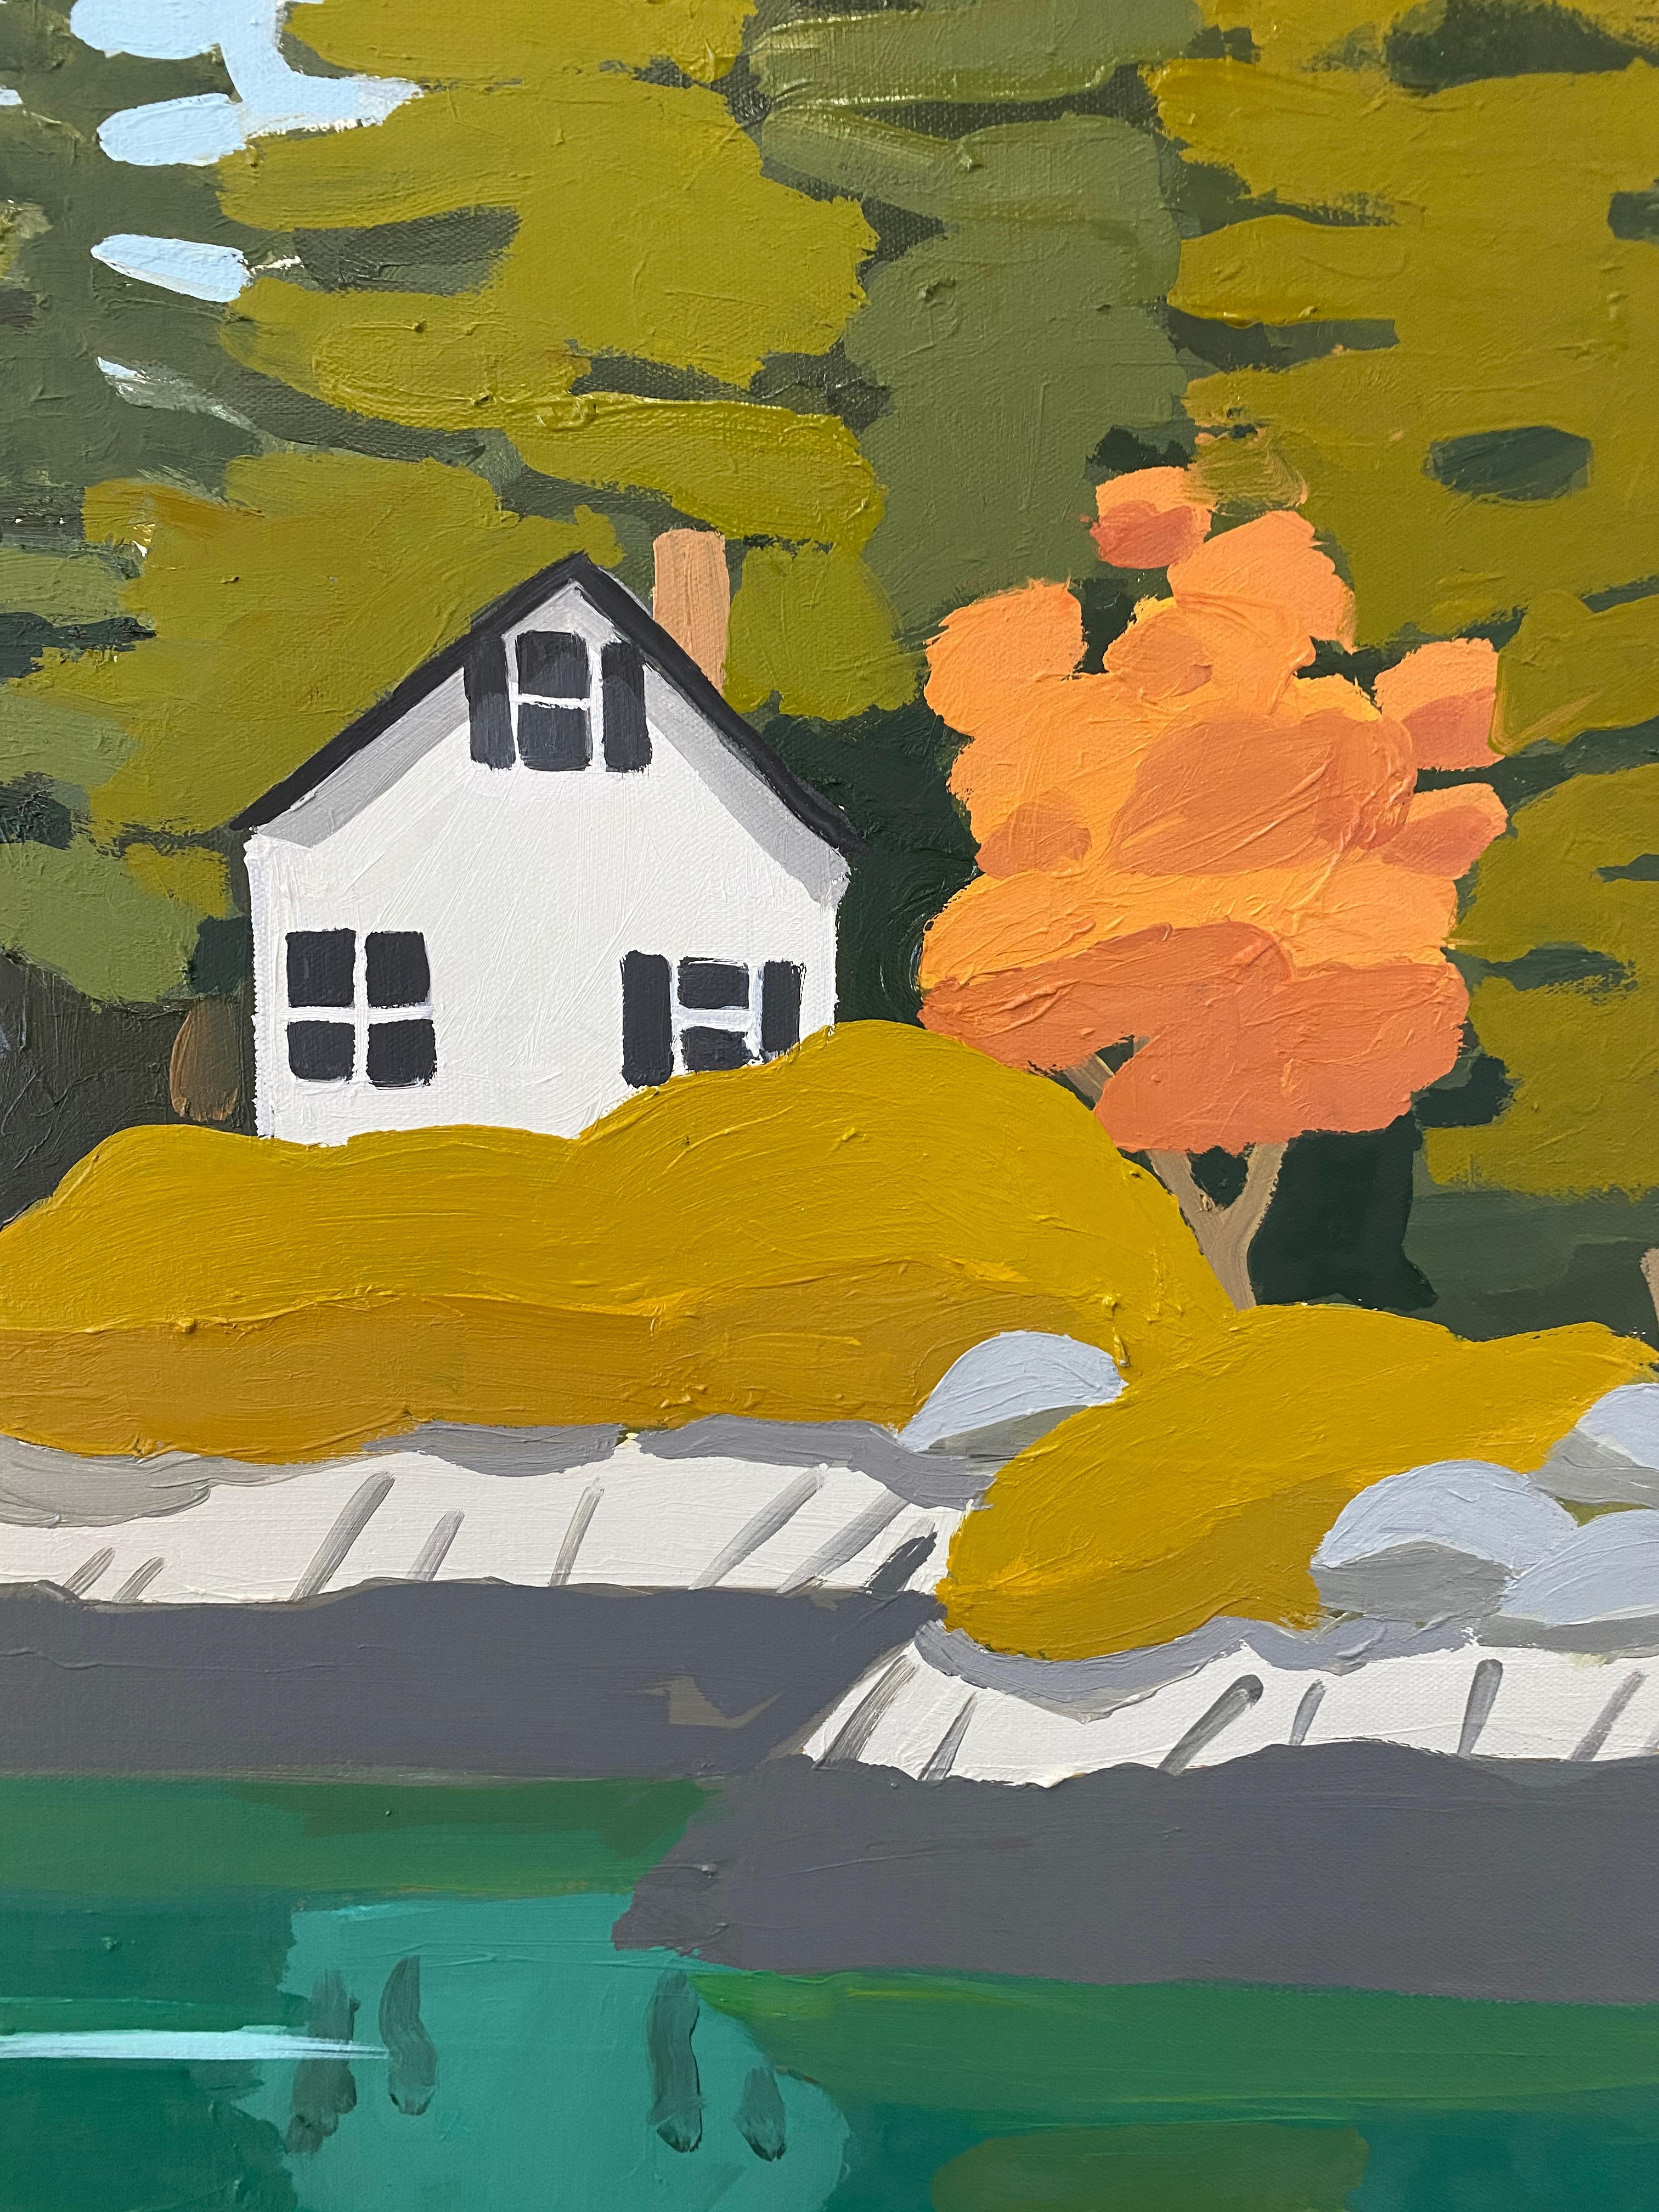 Sheep Island, Maine Landscape, Blue Water, Green Trees, White House on Shoreline 1